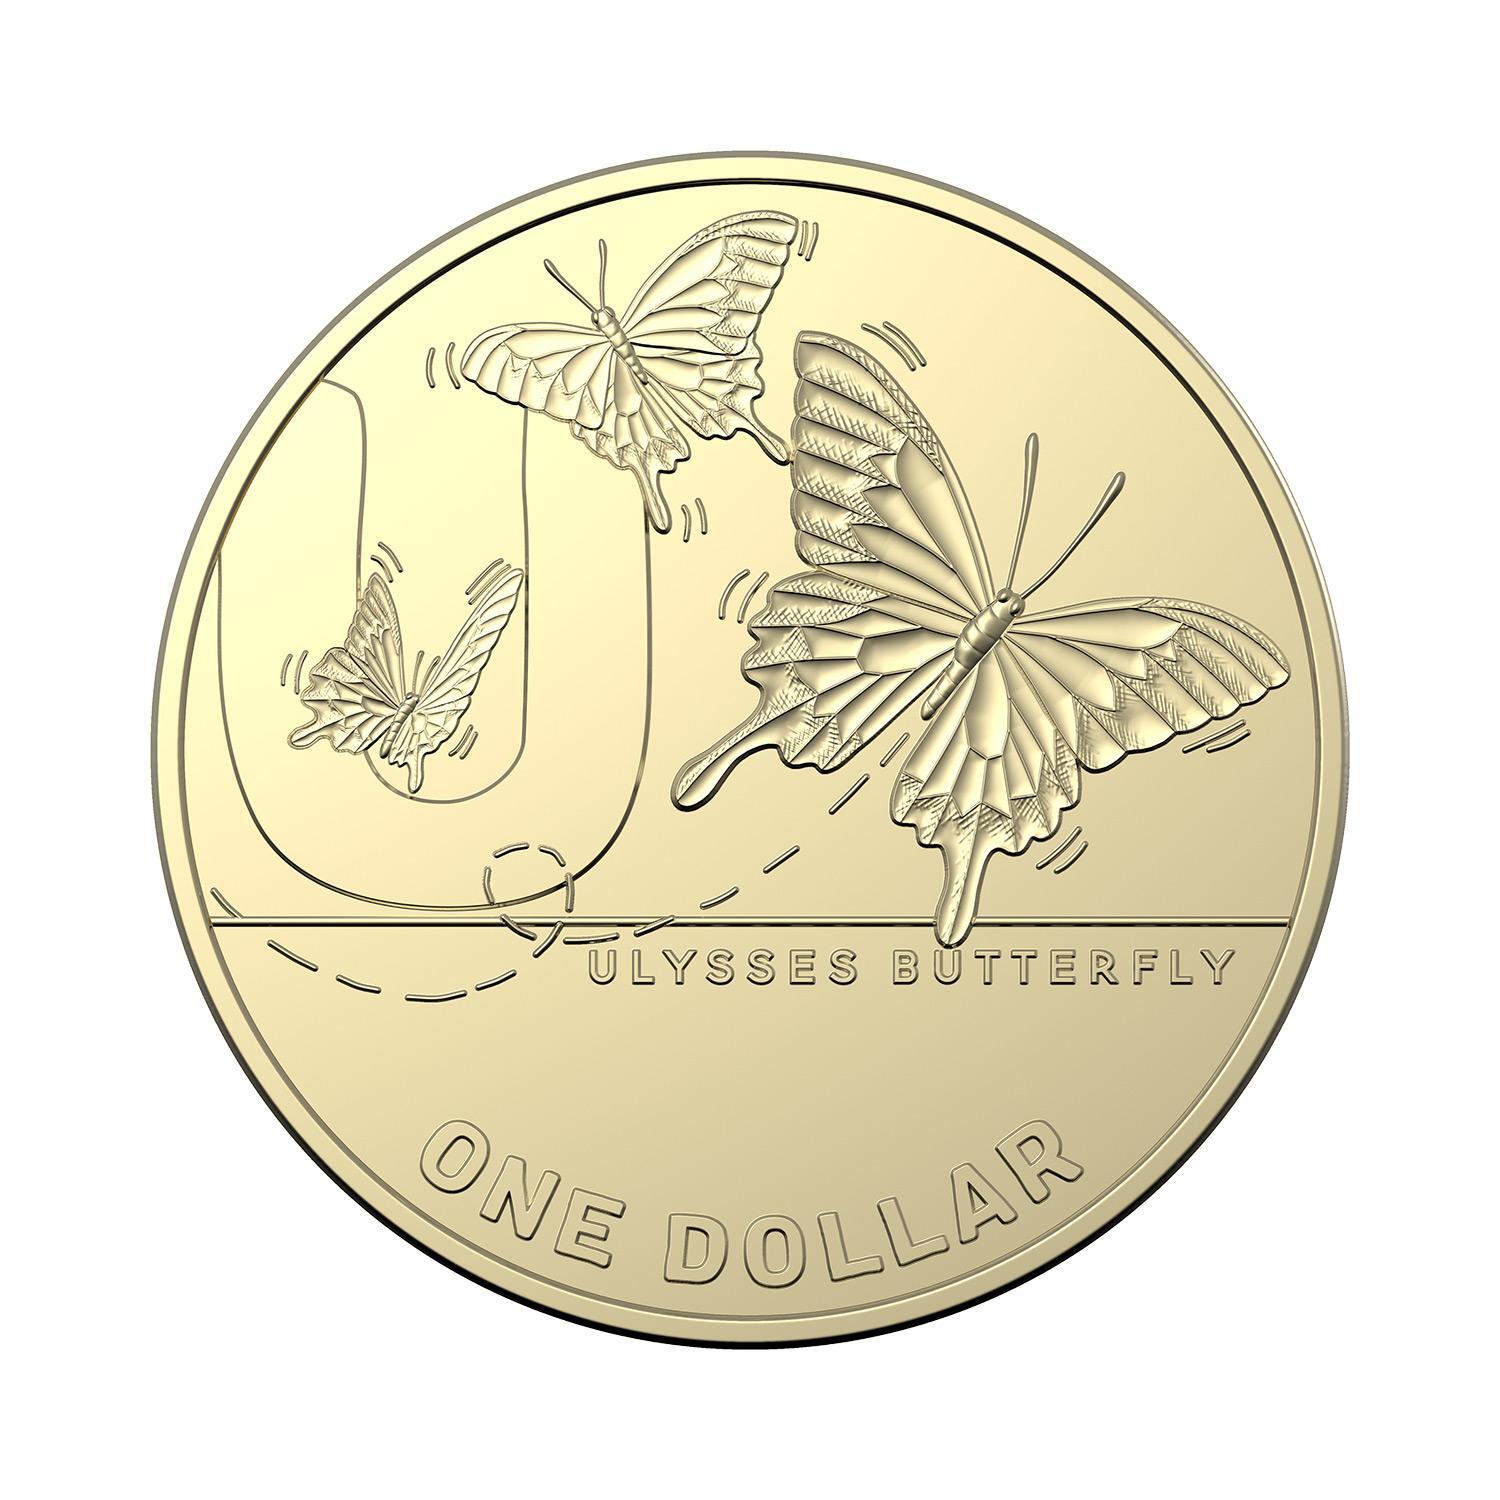 2021 $1 Great Aussie Coin Hunt 2 – Letter 'U' coin